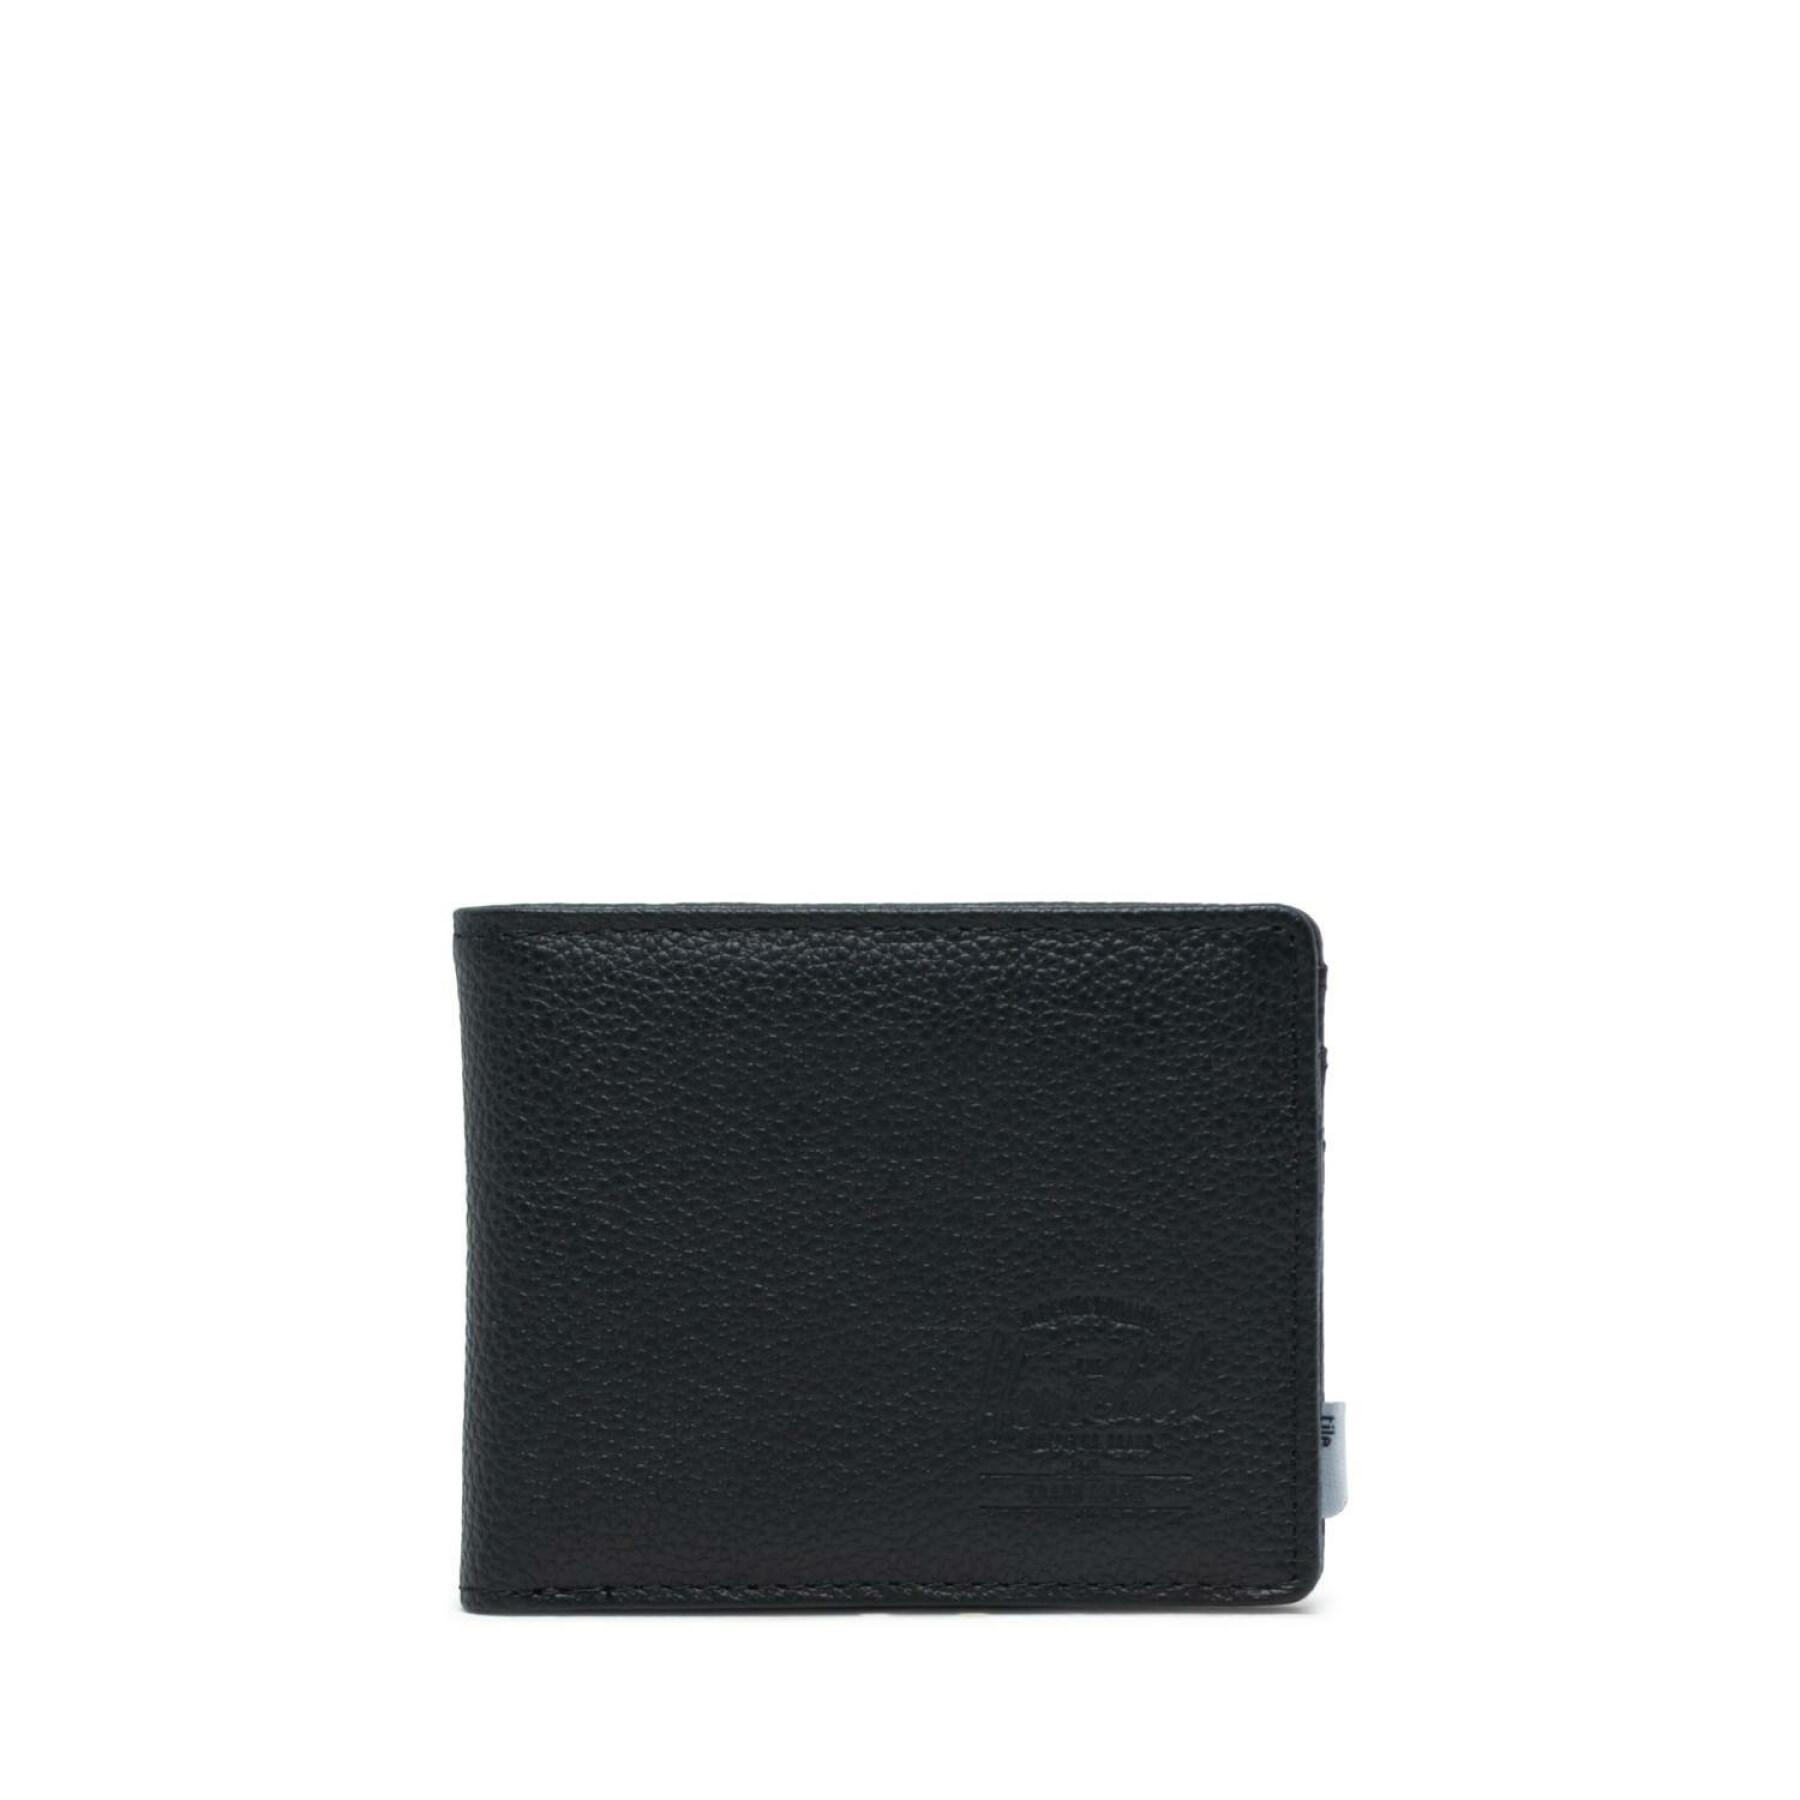 Portefeuille Herschel black pebbled leather